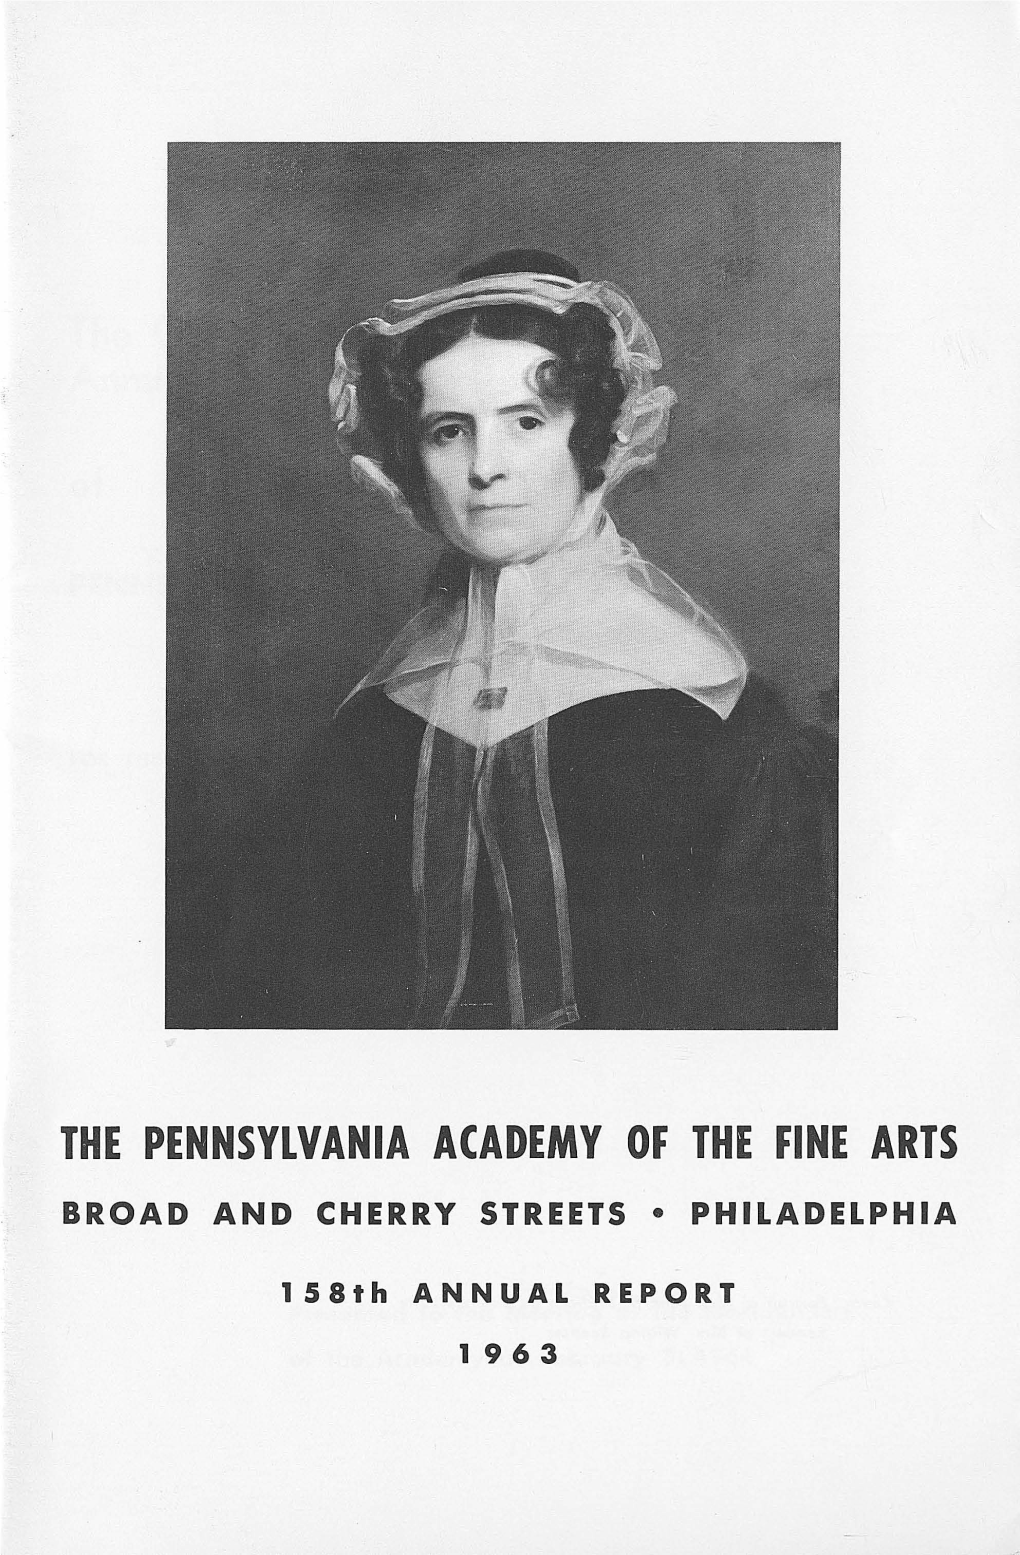 The Pennsylvania Academy of the Fine Arts Broad and Cherry Streets • Philadelphia